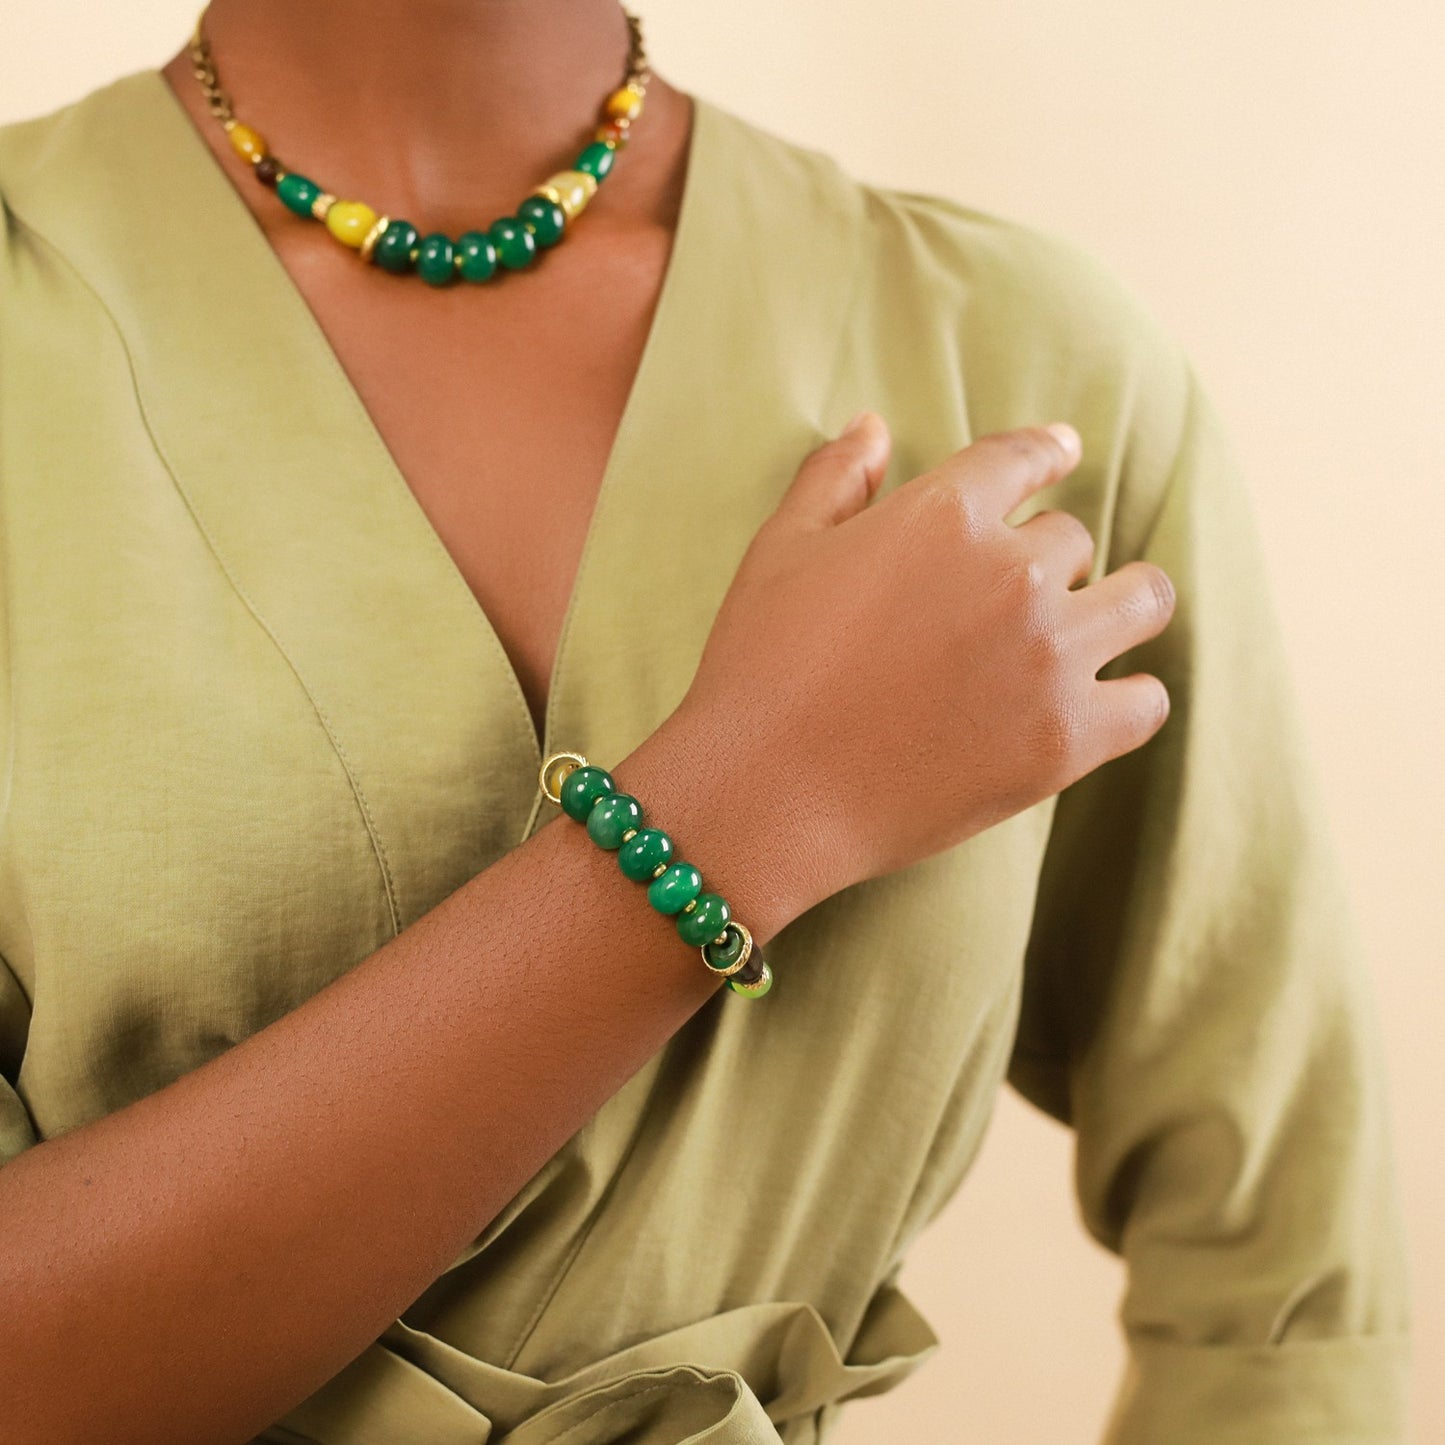 Agata Verde - Grosses Perles Pierres - Bracelet Extensible - Nature Bijoux